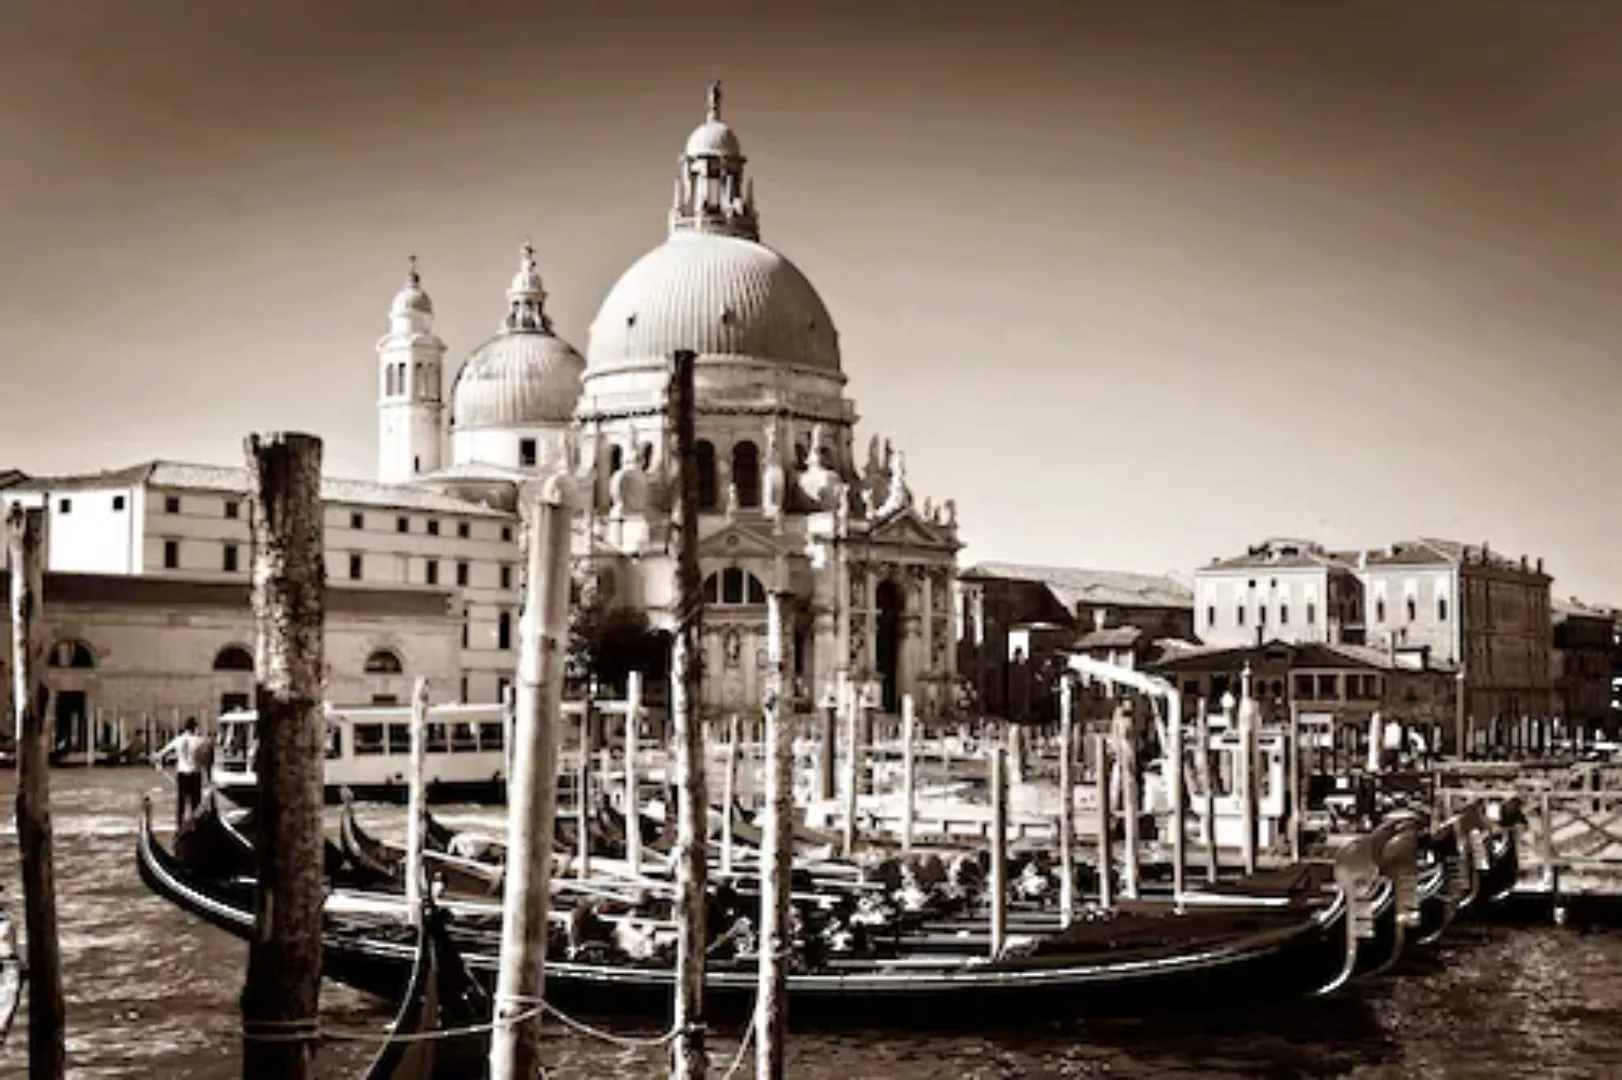 Papermoon Fototapete »Venedig Sepia« günstig online kaufen